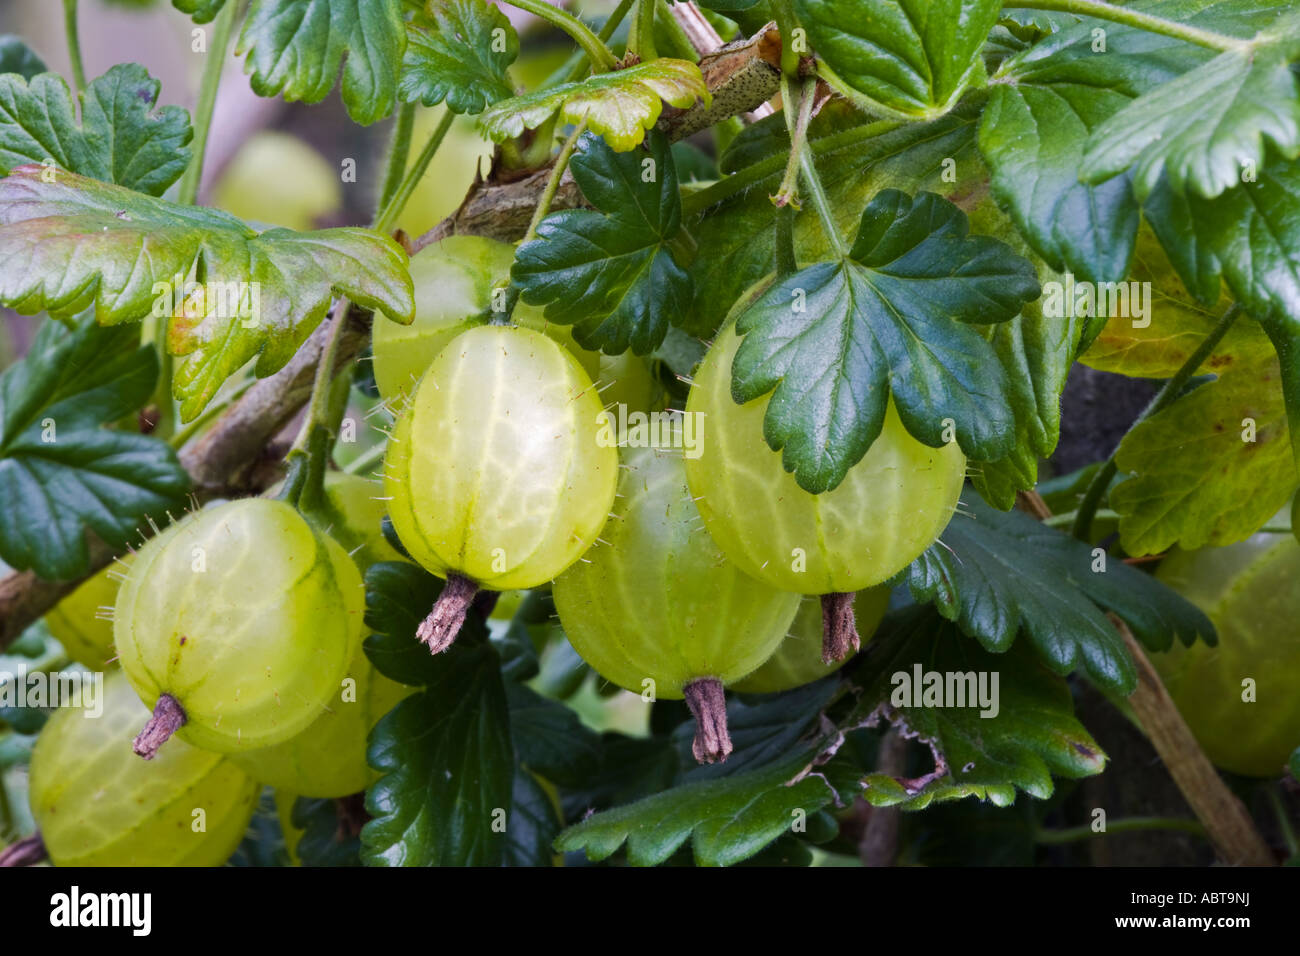 Ribes uva crispa, gooseberries growing in an English garden Stock Photo